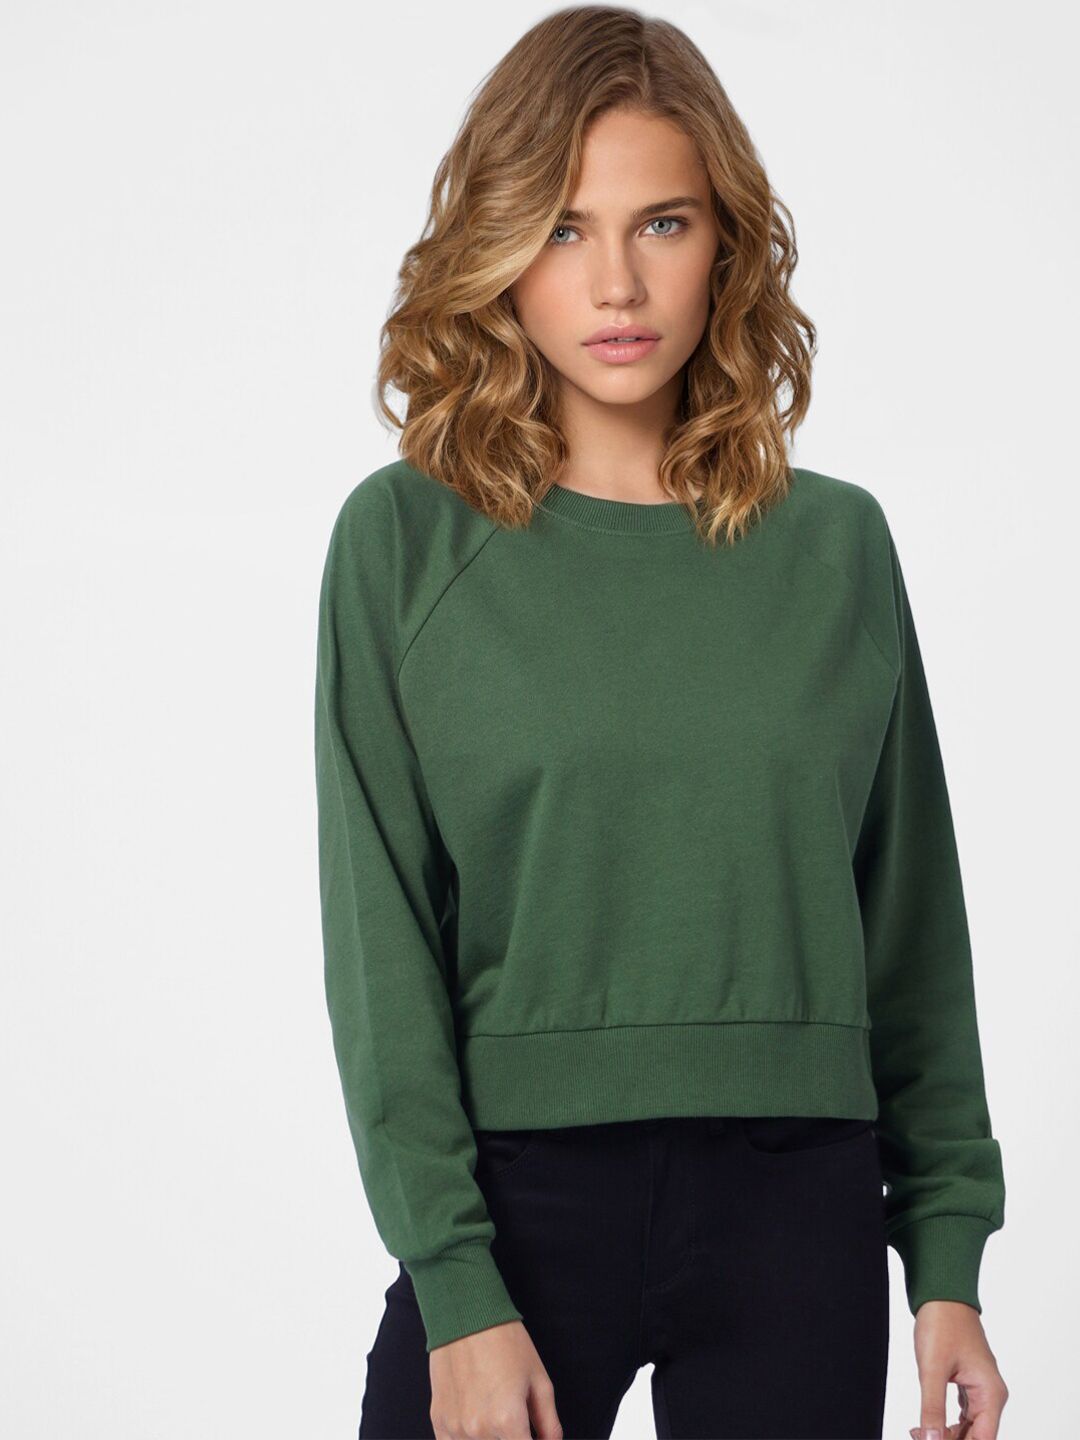 ONLY Women Green Sweatshirt Price in India